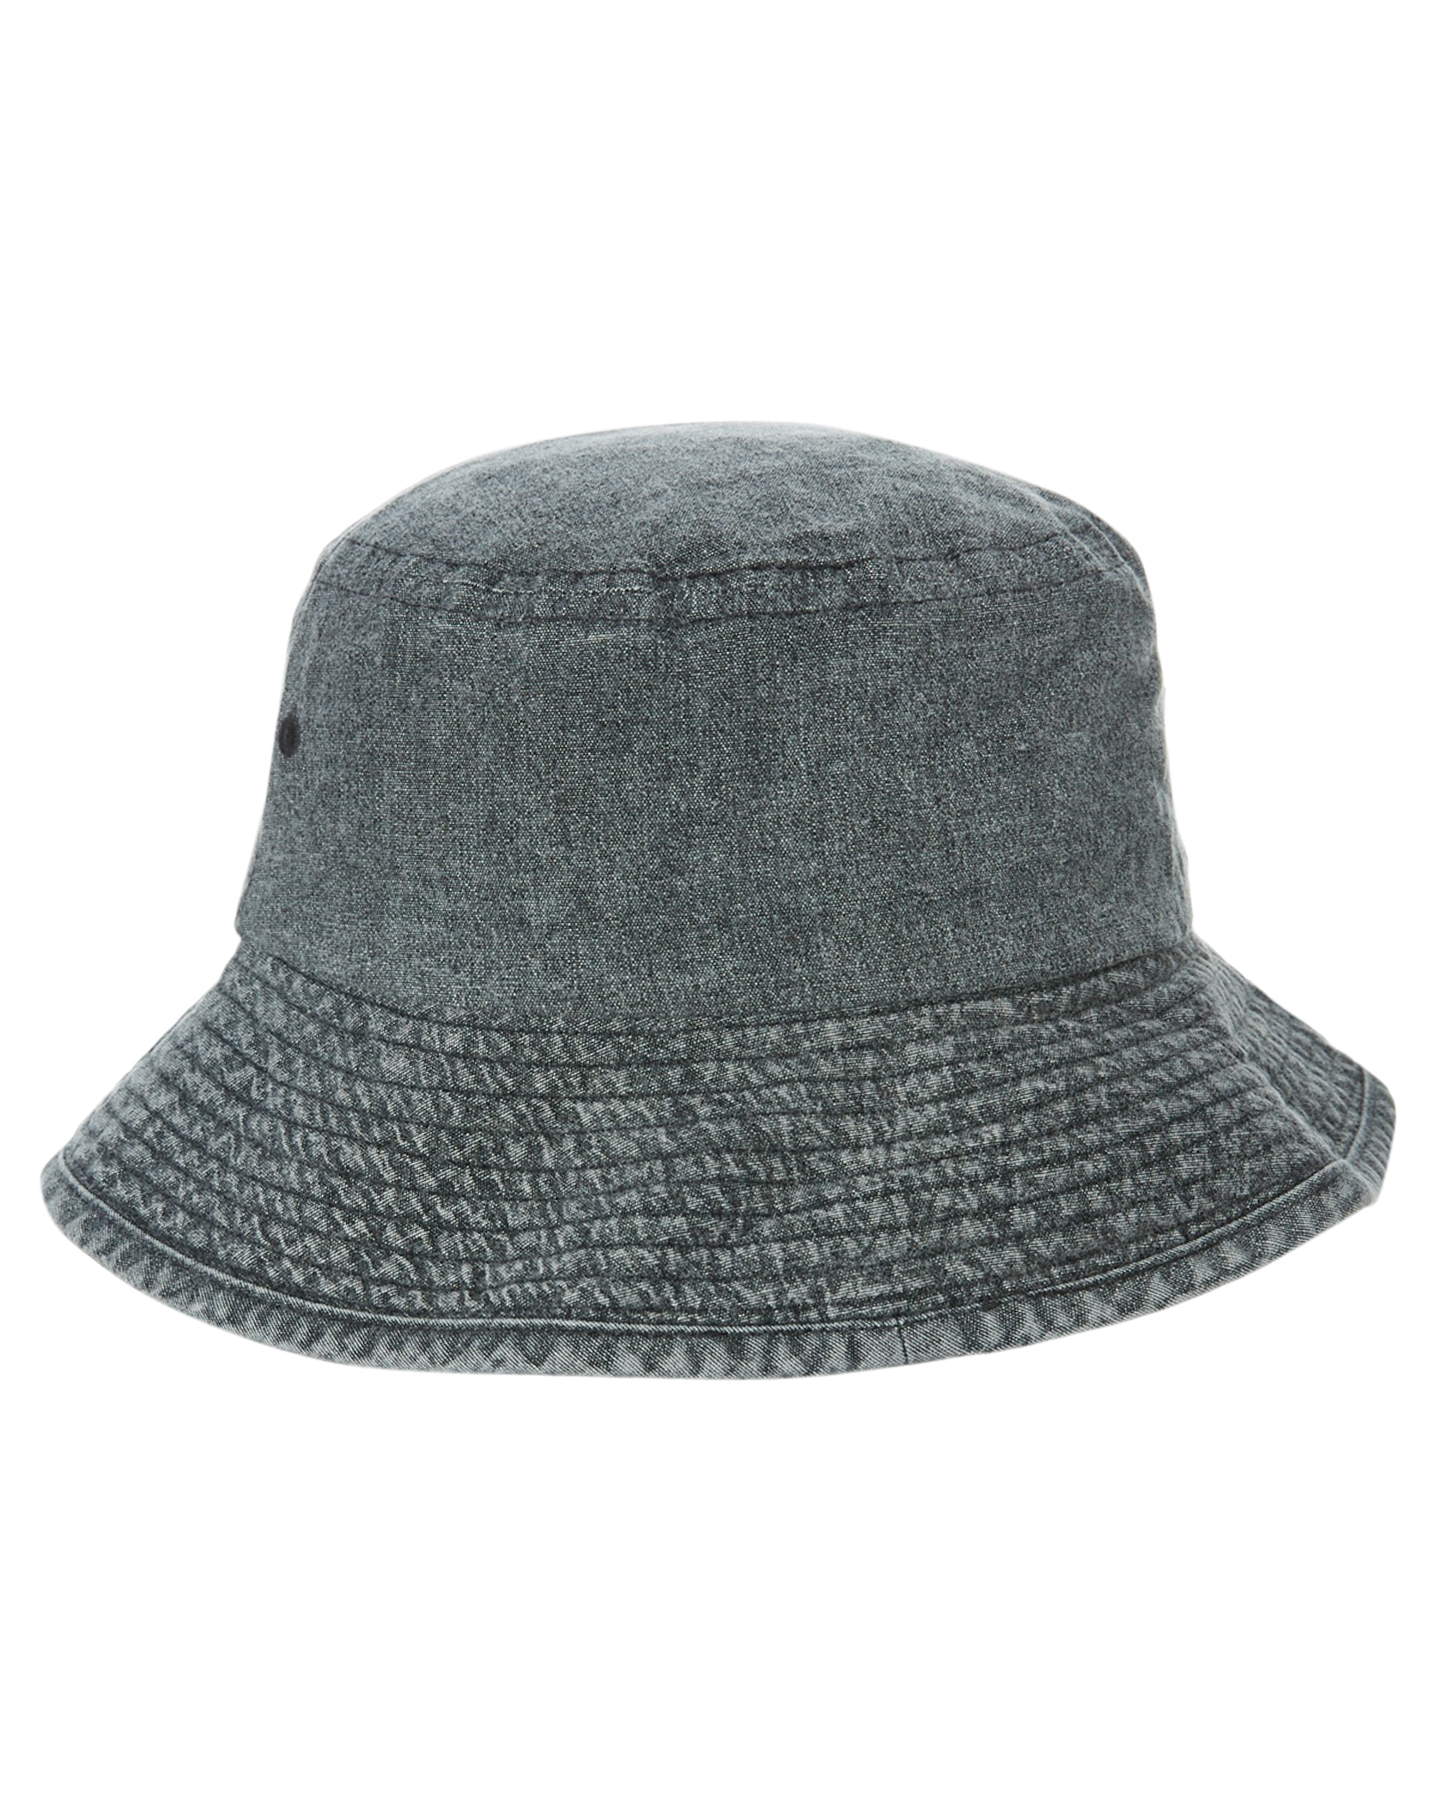 Billabong Peyote Washed Bucket Hat - Washed Black | SurfStitch